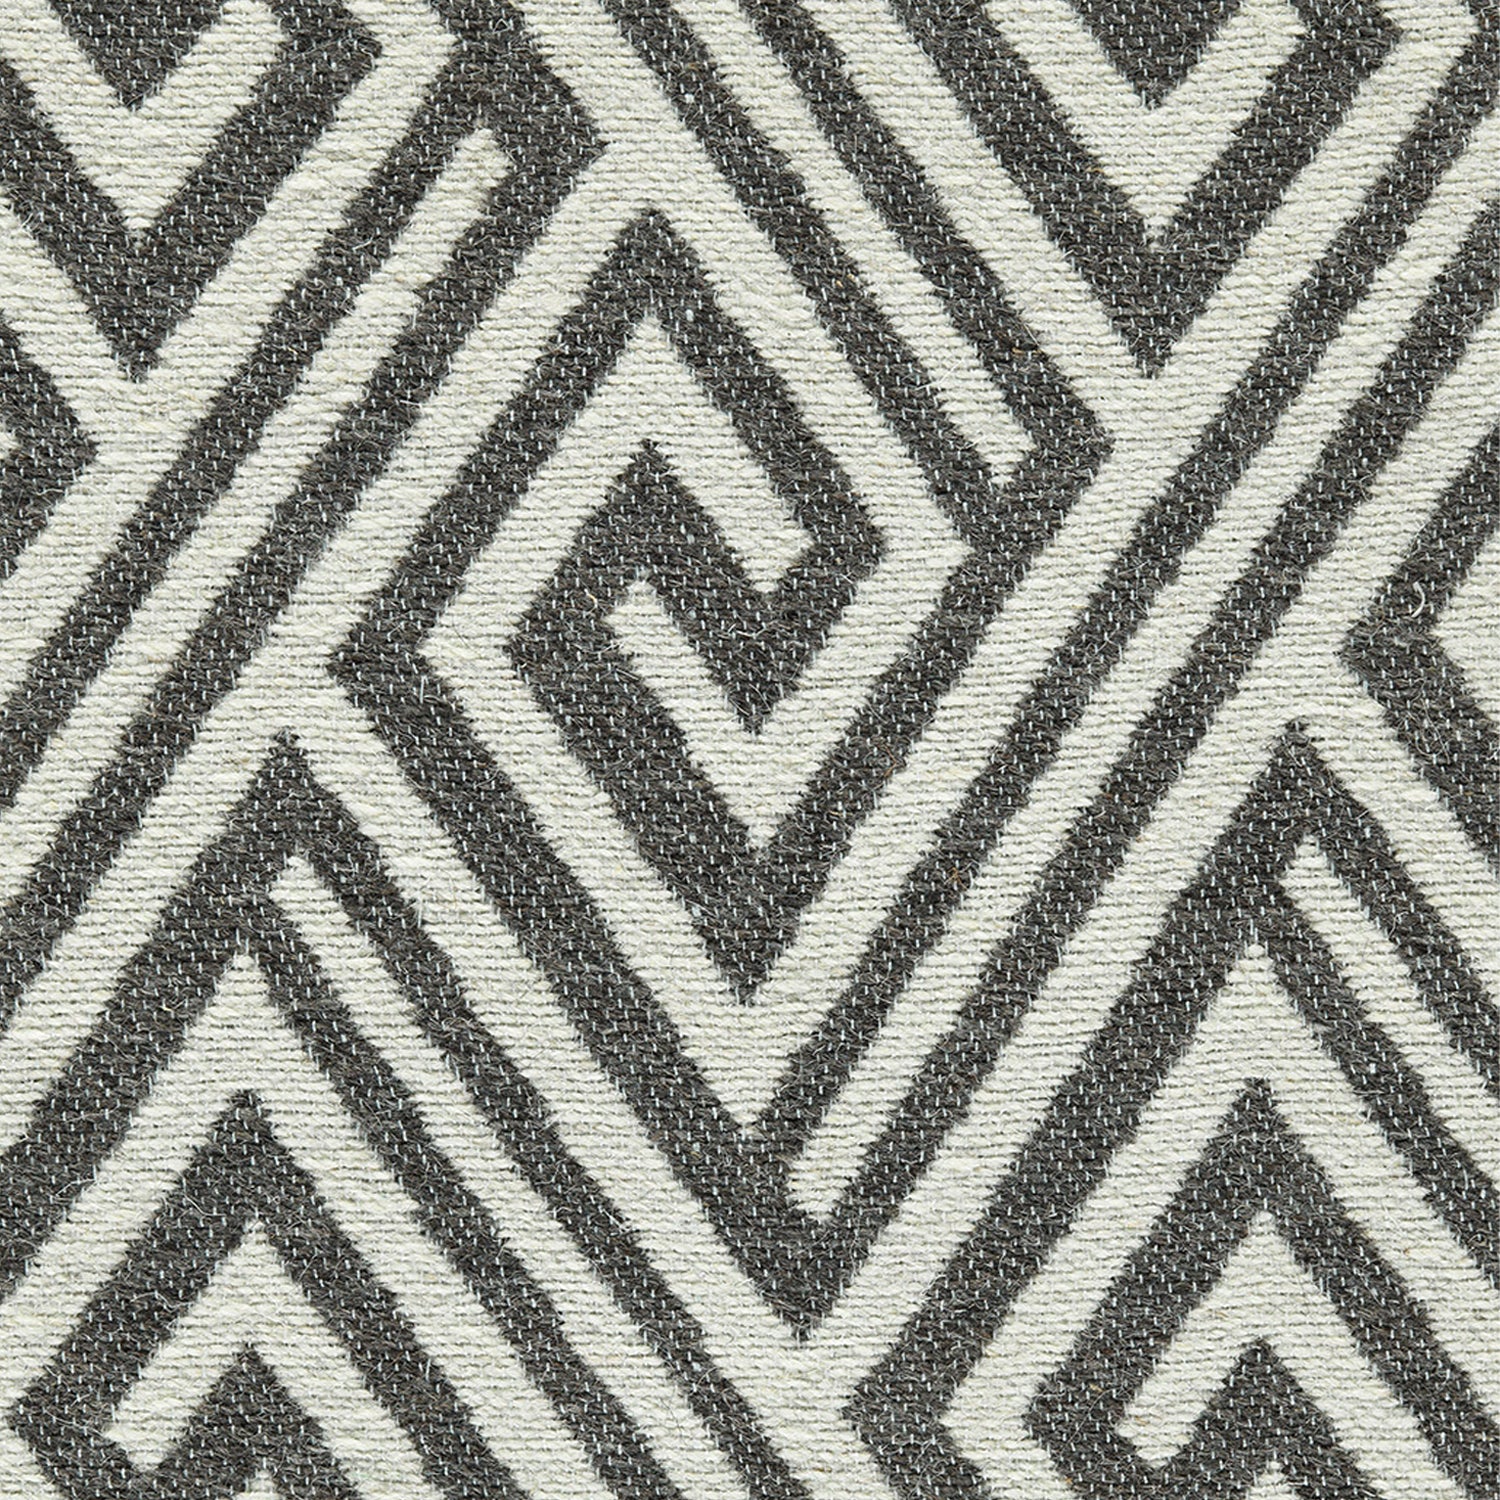 Wool-blend broadloom carpet swatch in an interlocking linear diamond pattern in cream and charcoal.